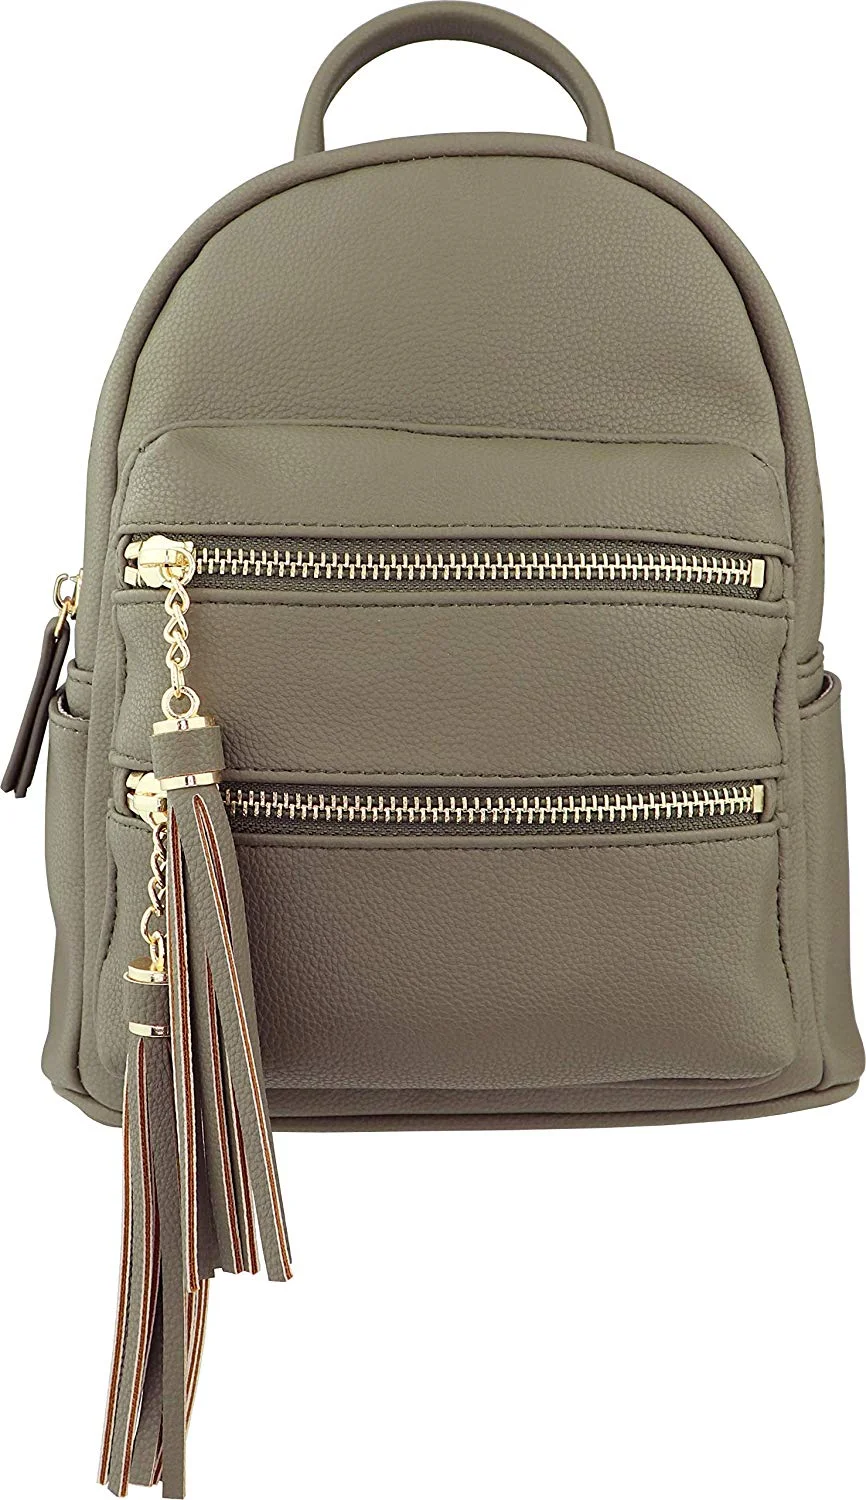 Vegan Multi-Zipper Top Handle Mini Backpack with Tassel Accents